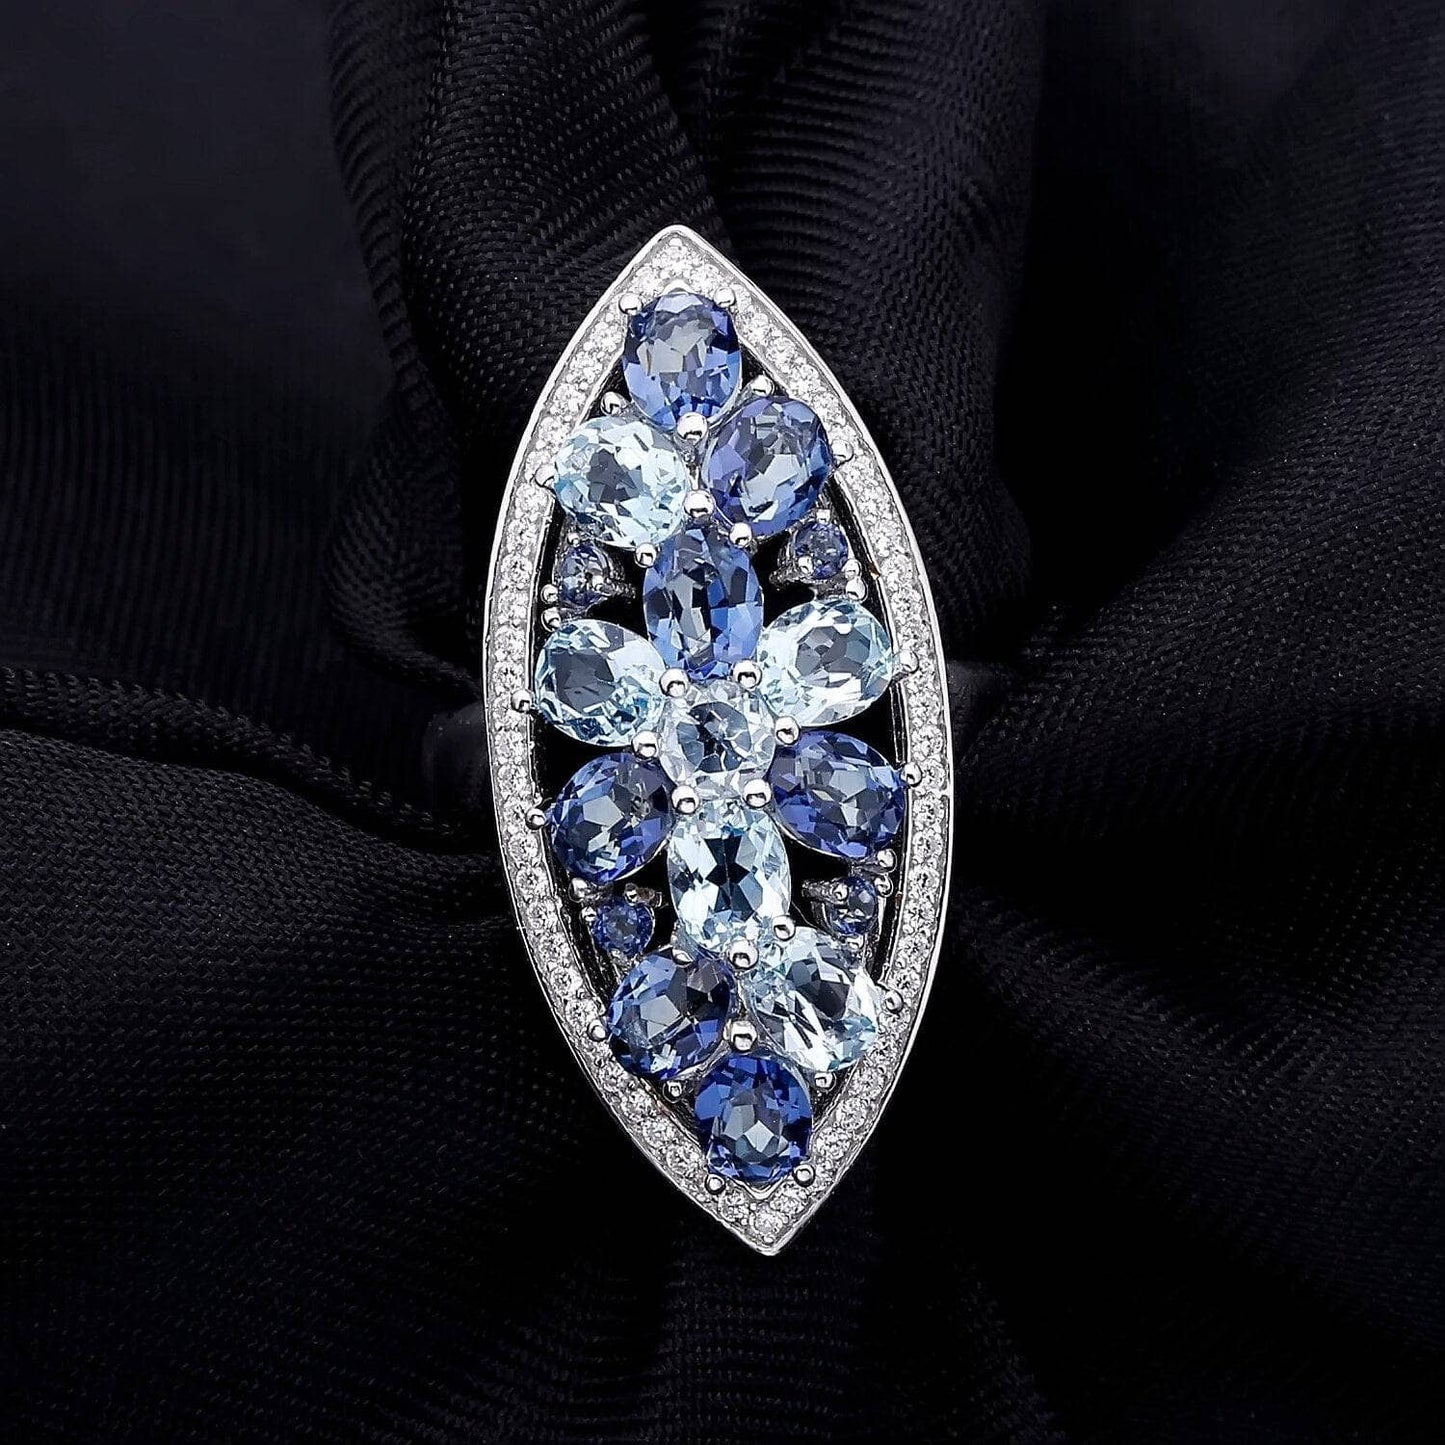 Natural Topaz Mystic Quartz Jewelry Set-Black Diamonds New York